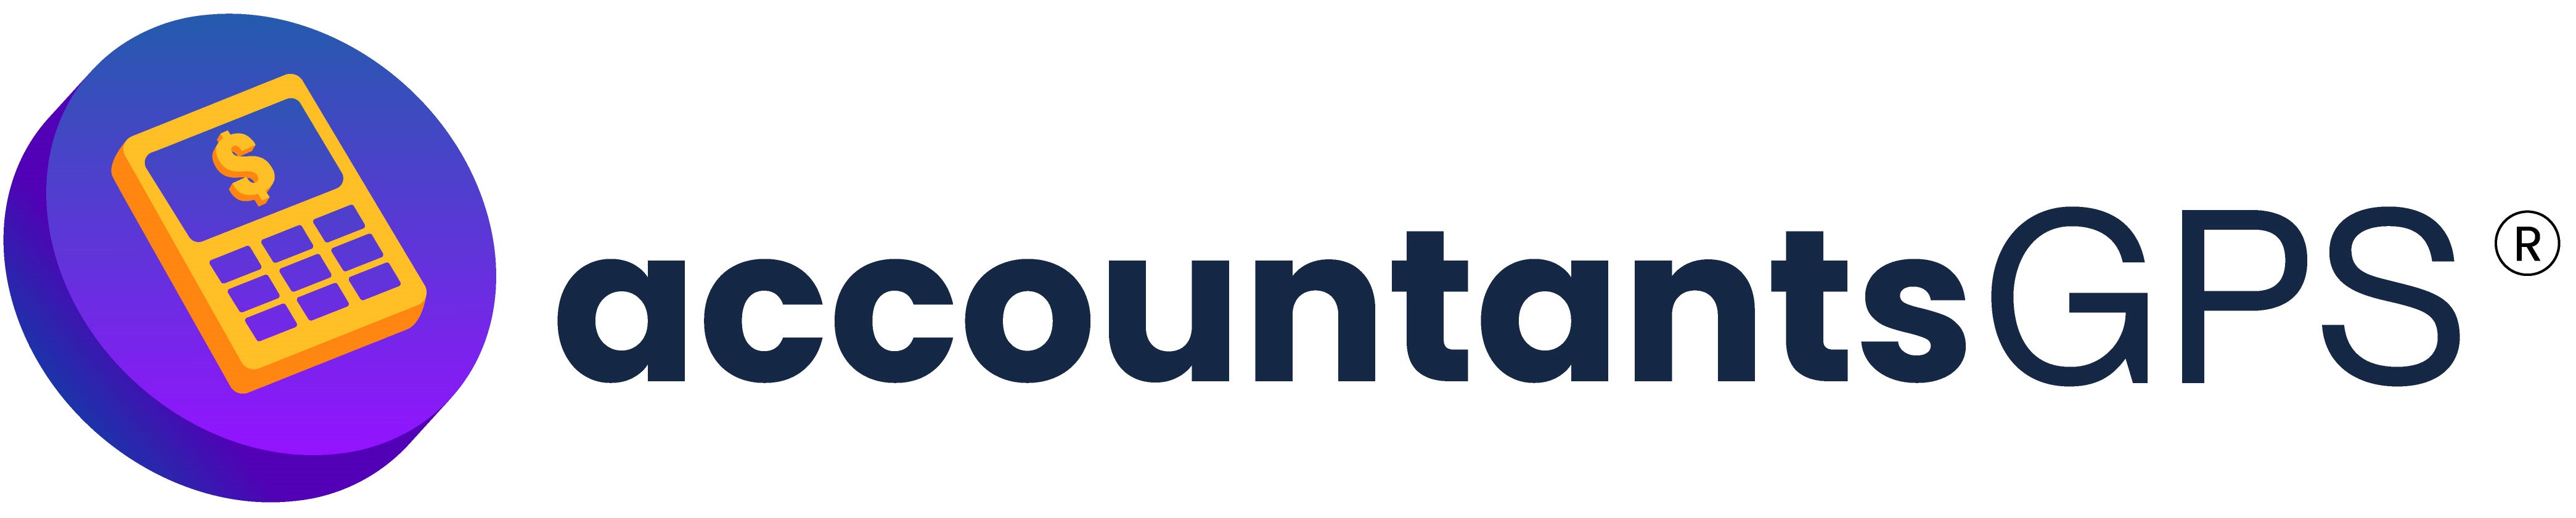 Accountants GPS Logo